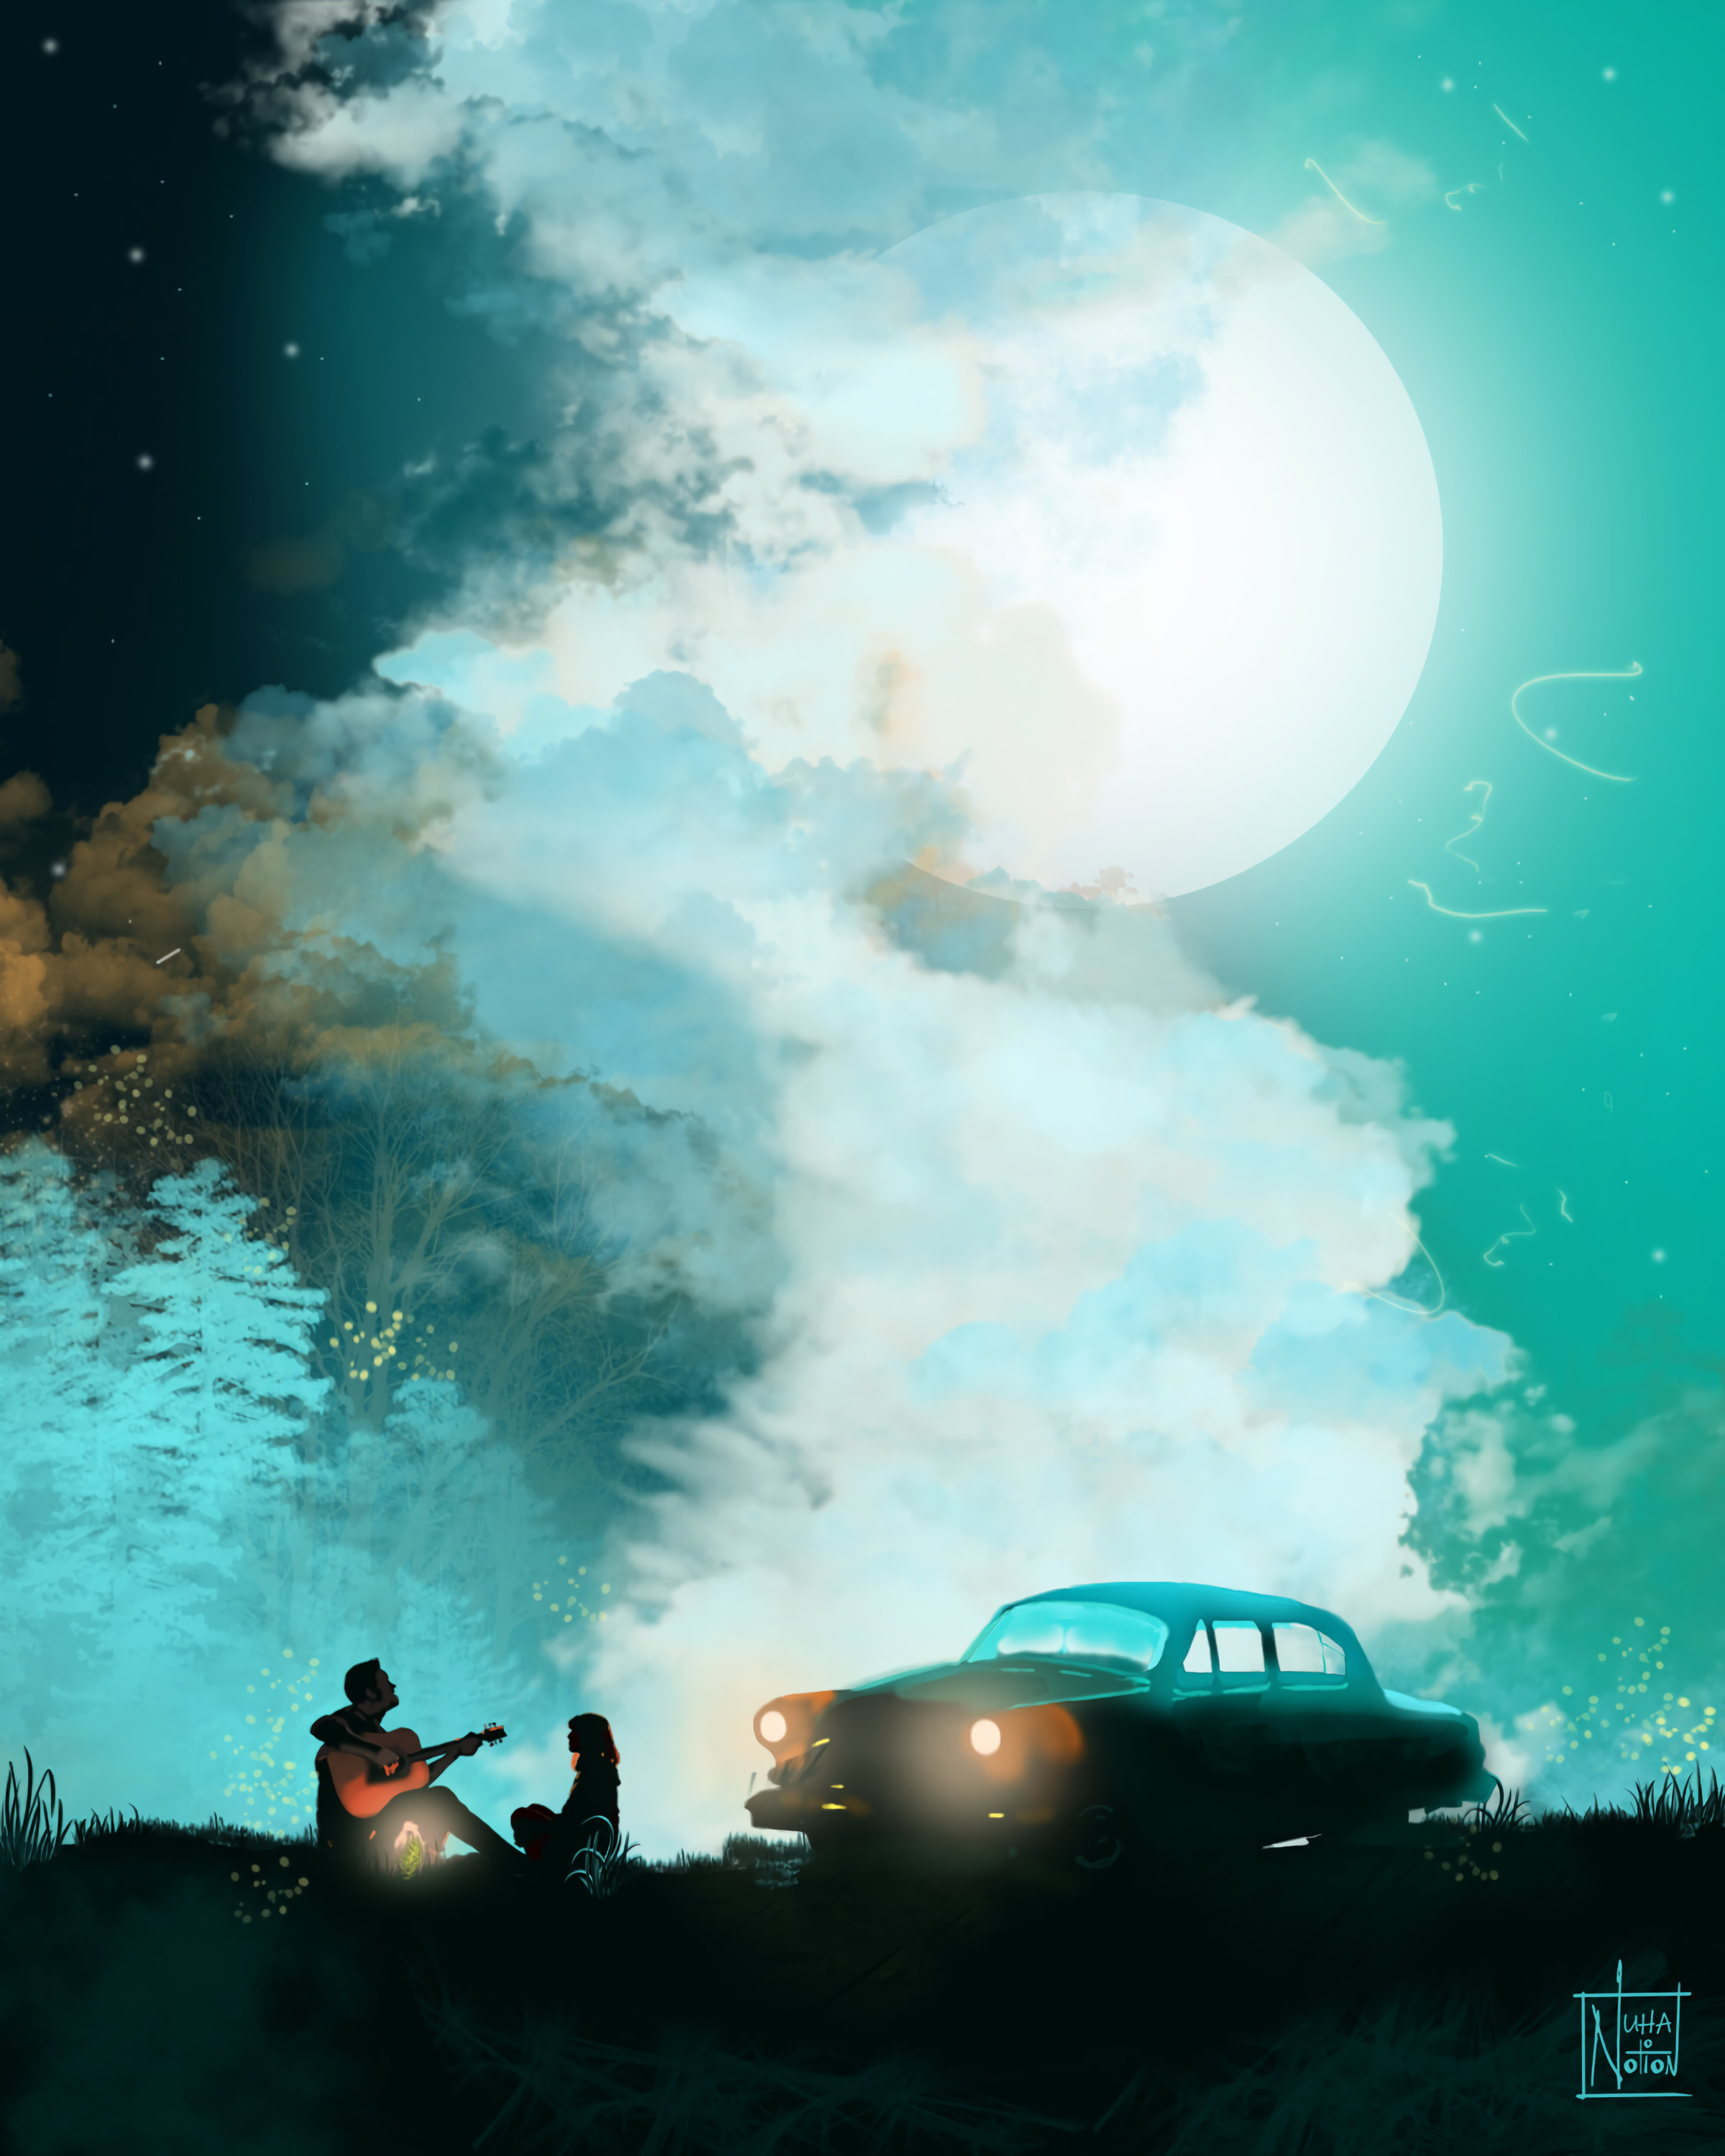 art, guitar, night, silhouettes, moon, car